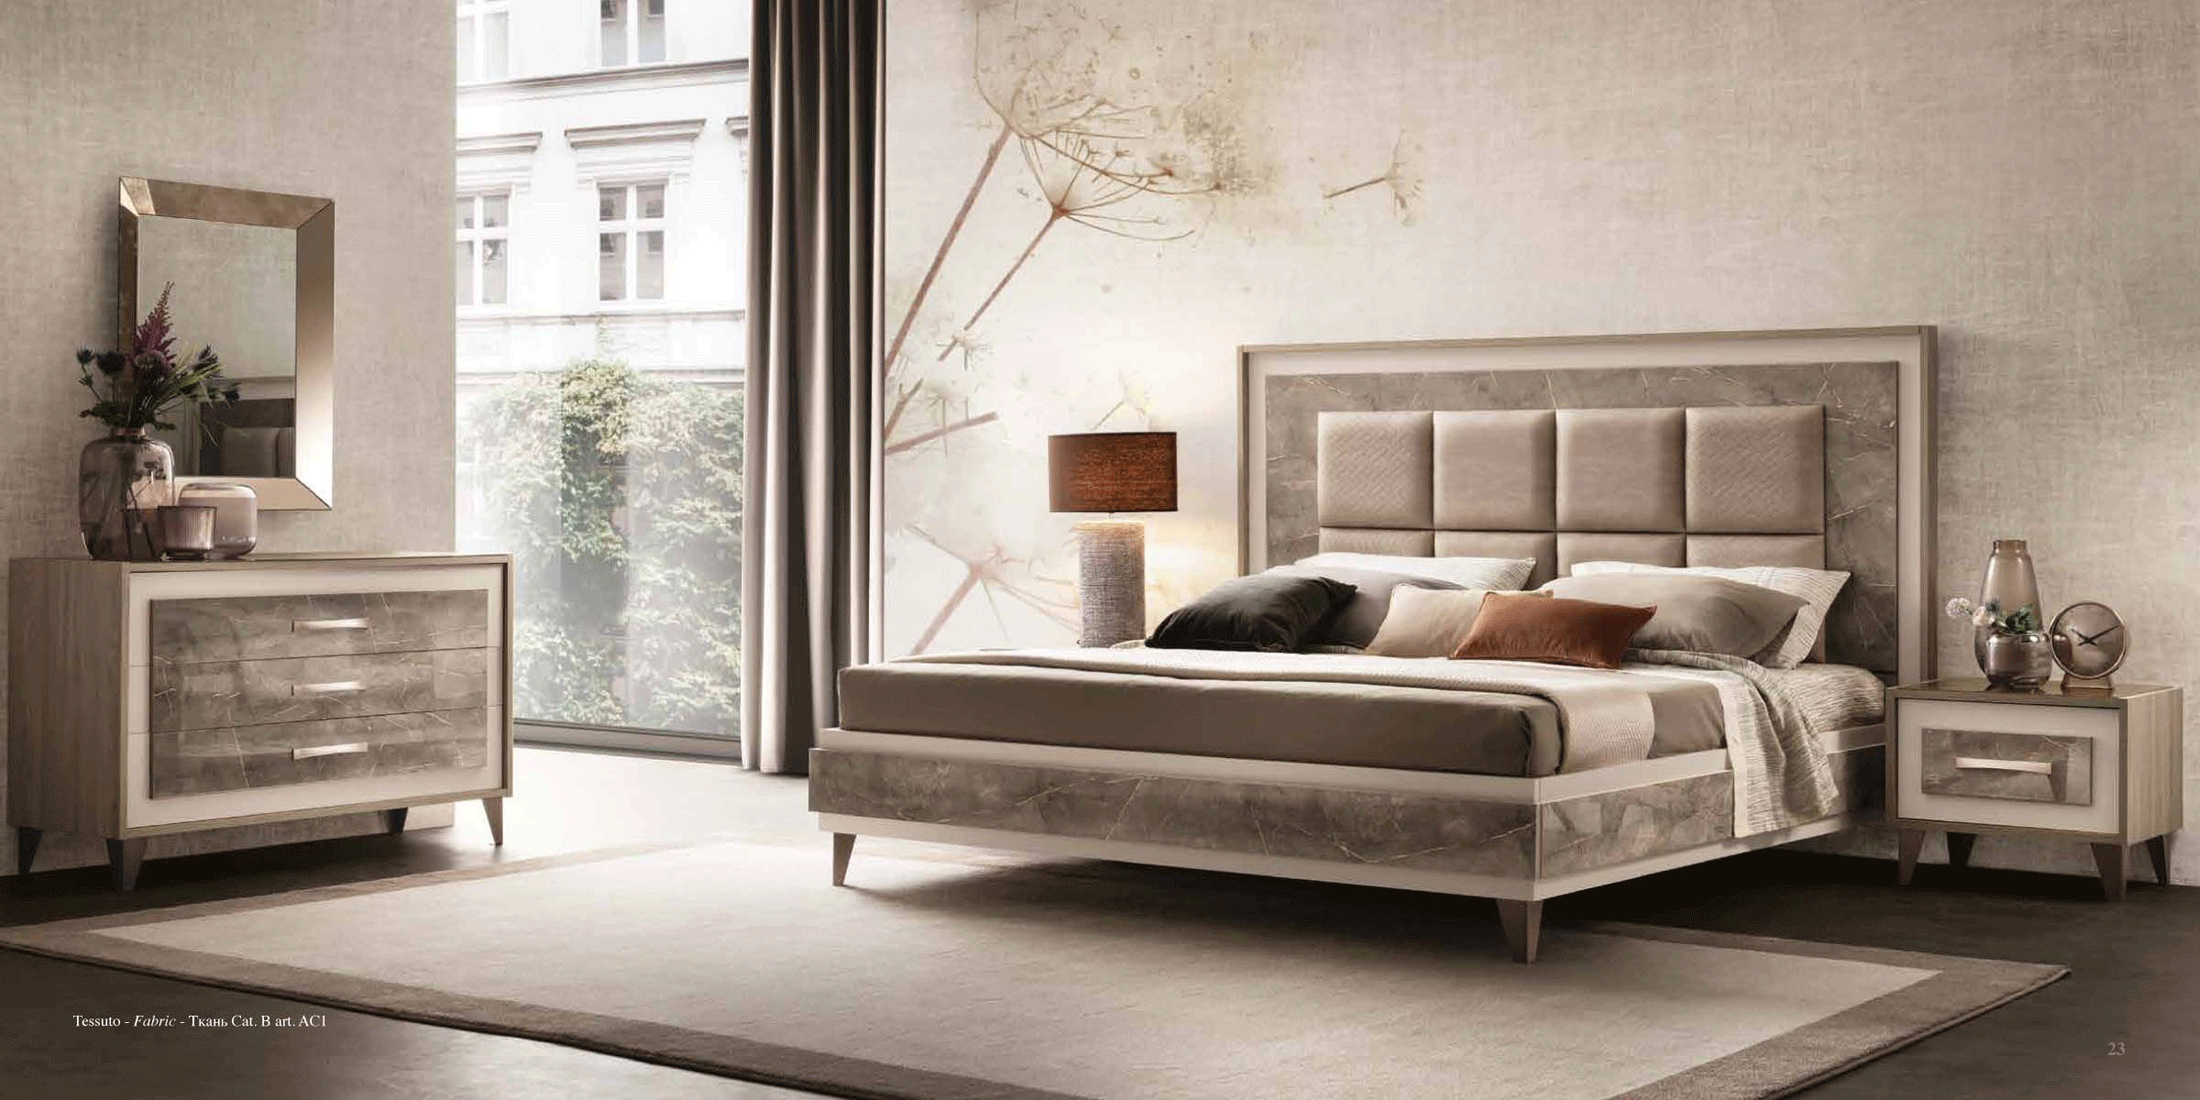 Brands Arredoclassic Living Room, Italy ArredoAmbra Bedroom by Arredoclassic, Italy